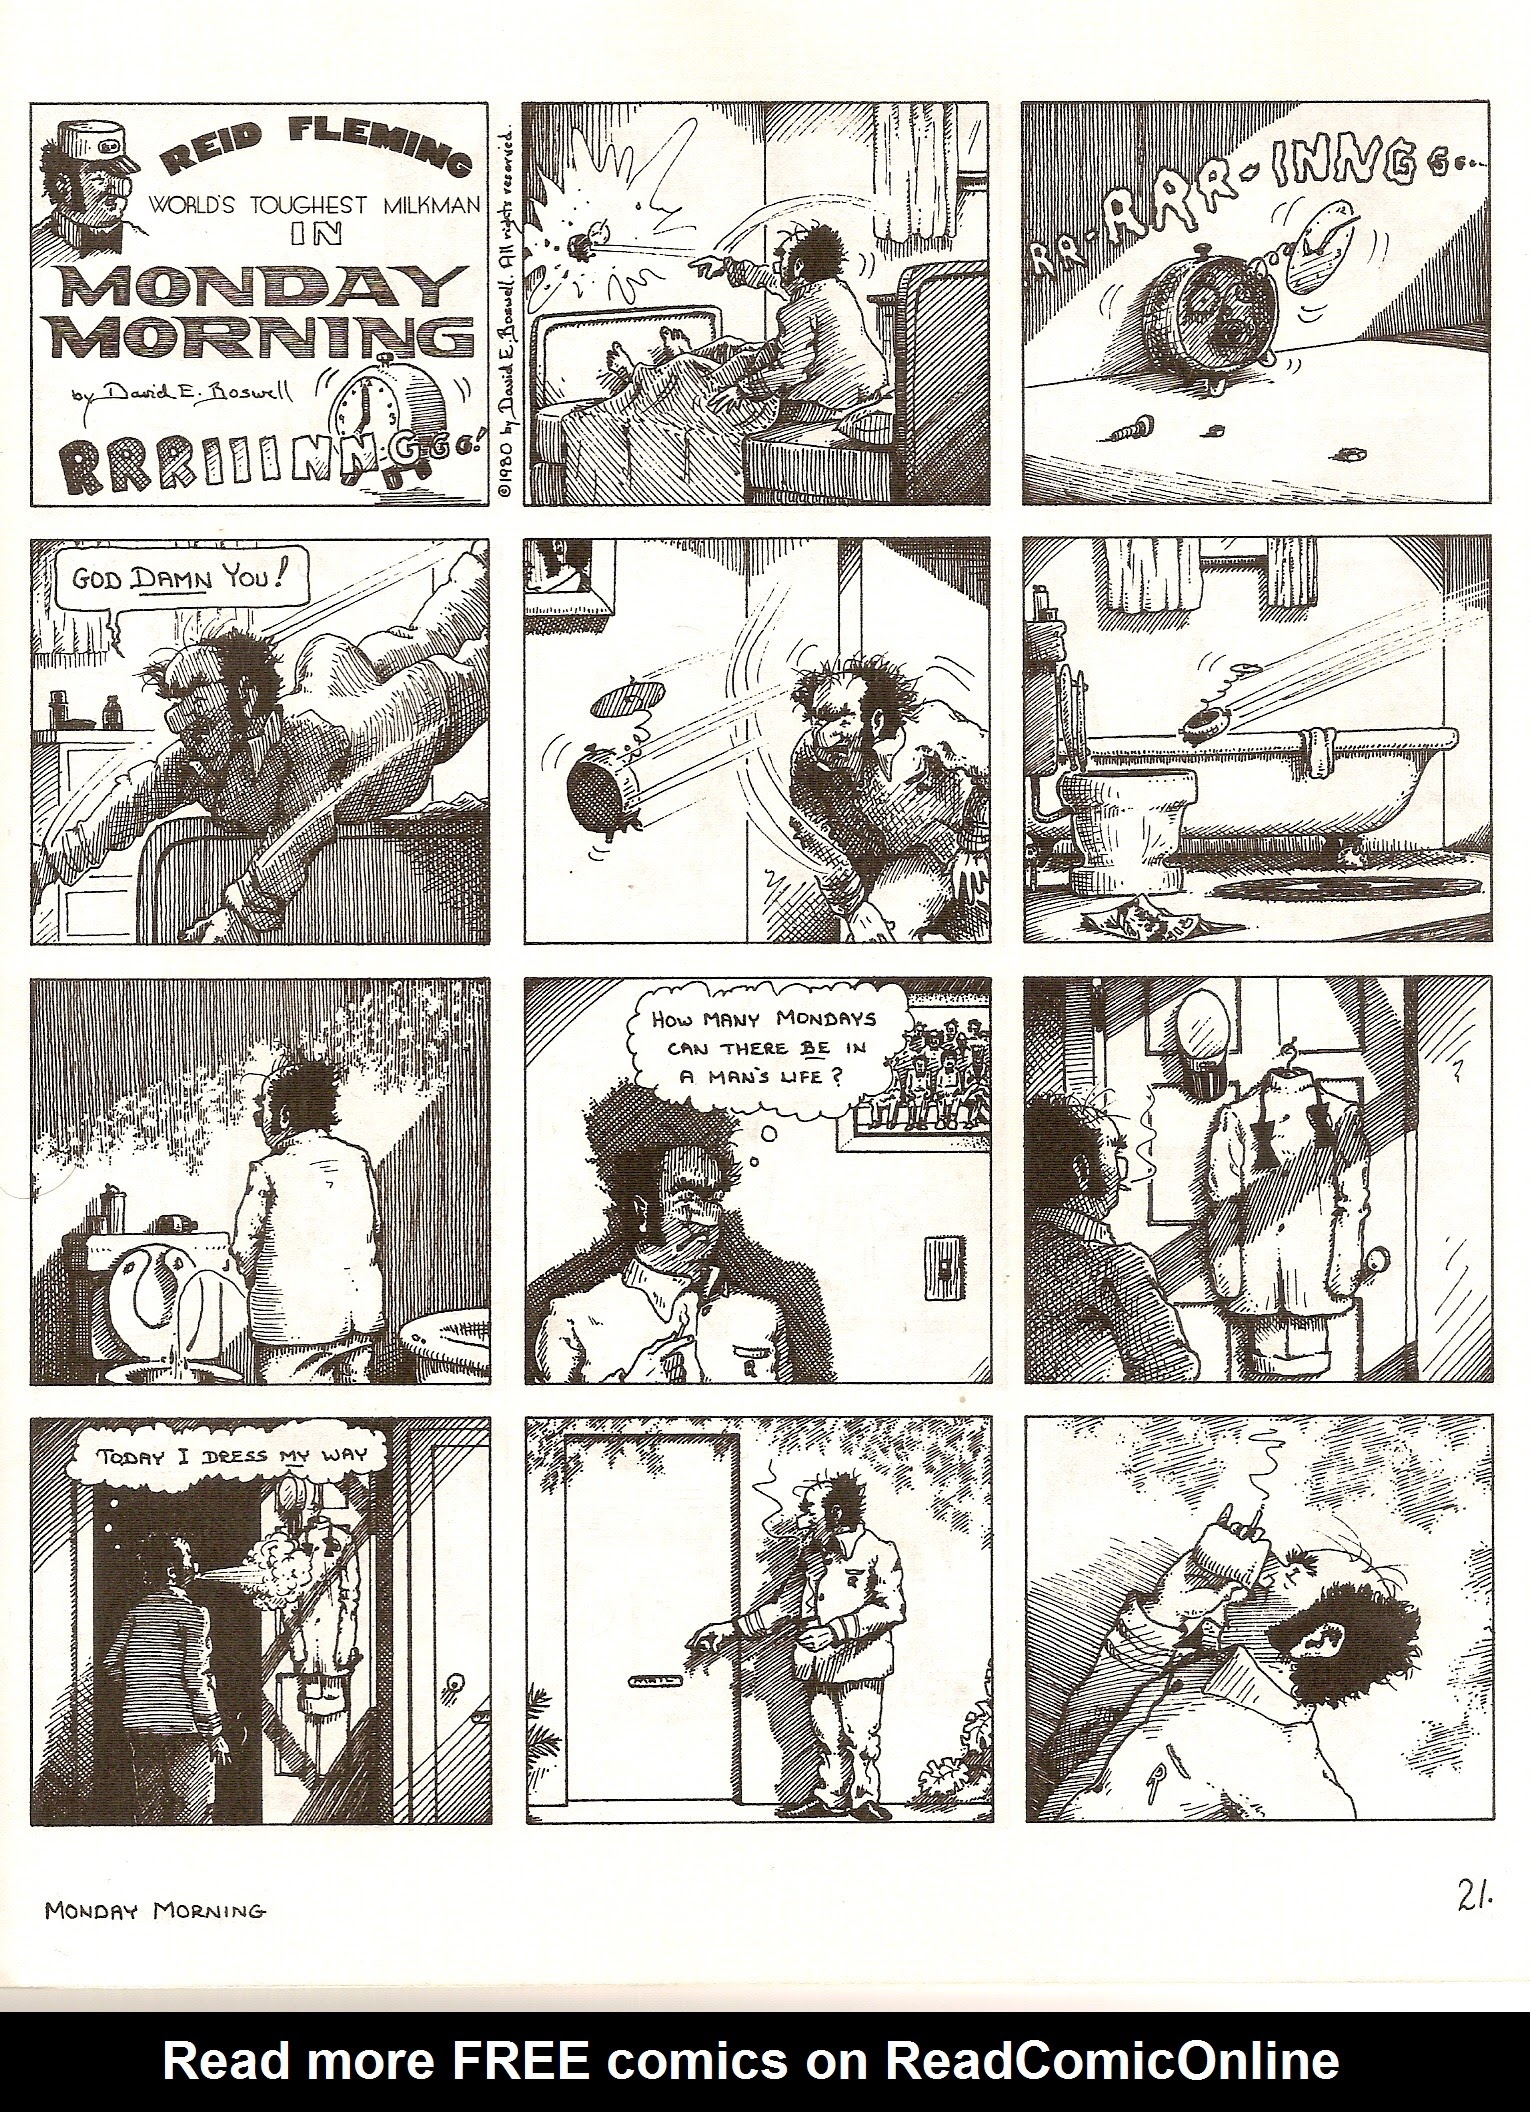 Read online Reid Fleming, World's Toughest Milkman (1980) comic -  Issue #1 - 23